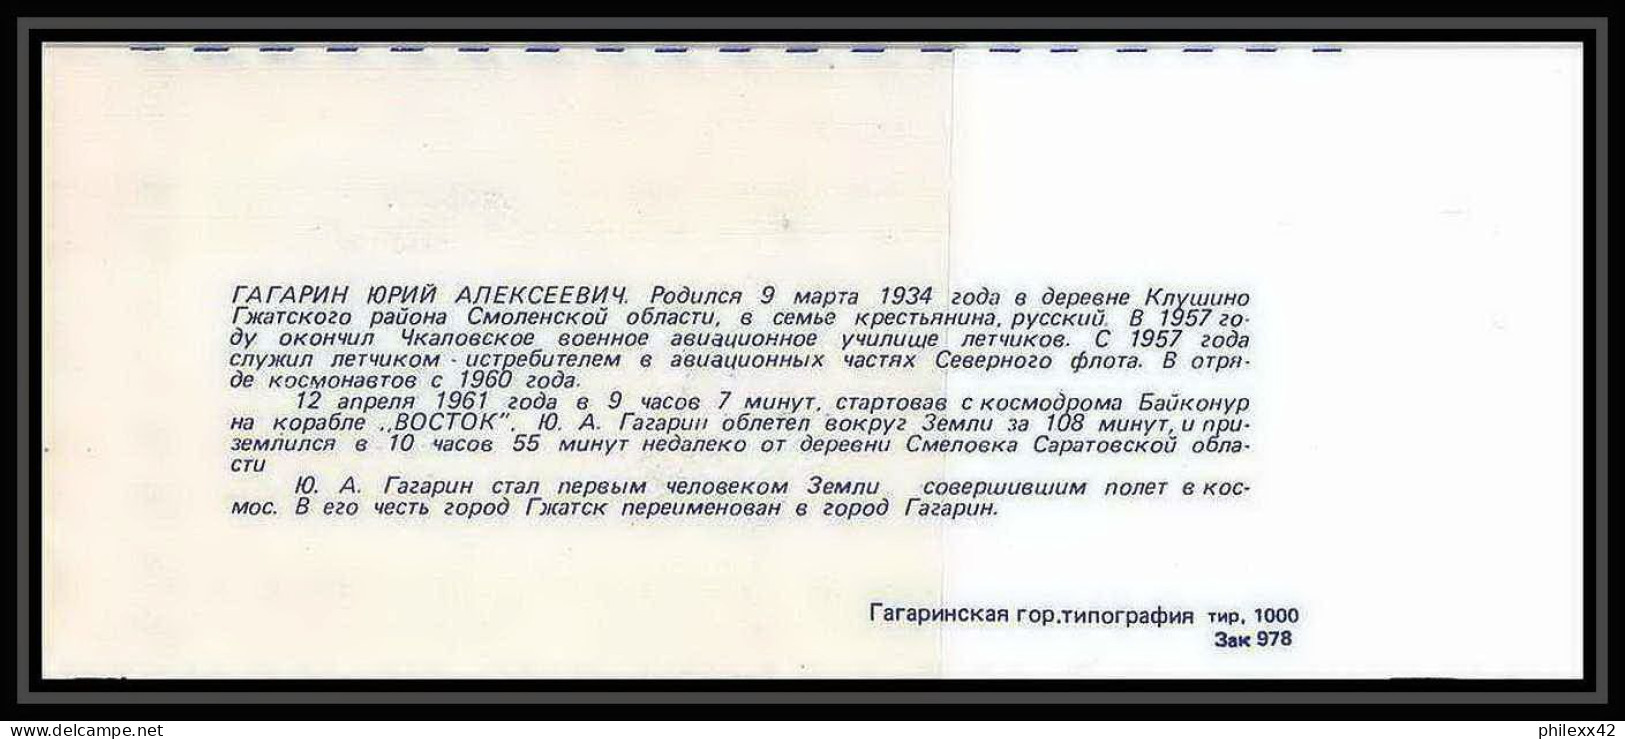 10243/ Espace (space) Lettre (cover Briefe) 9-20/3/1991 Federation Aeronautique Gagarine Gagarin (urss USSR) - Russia & USSR